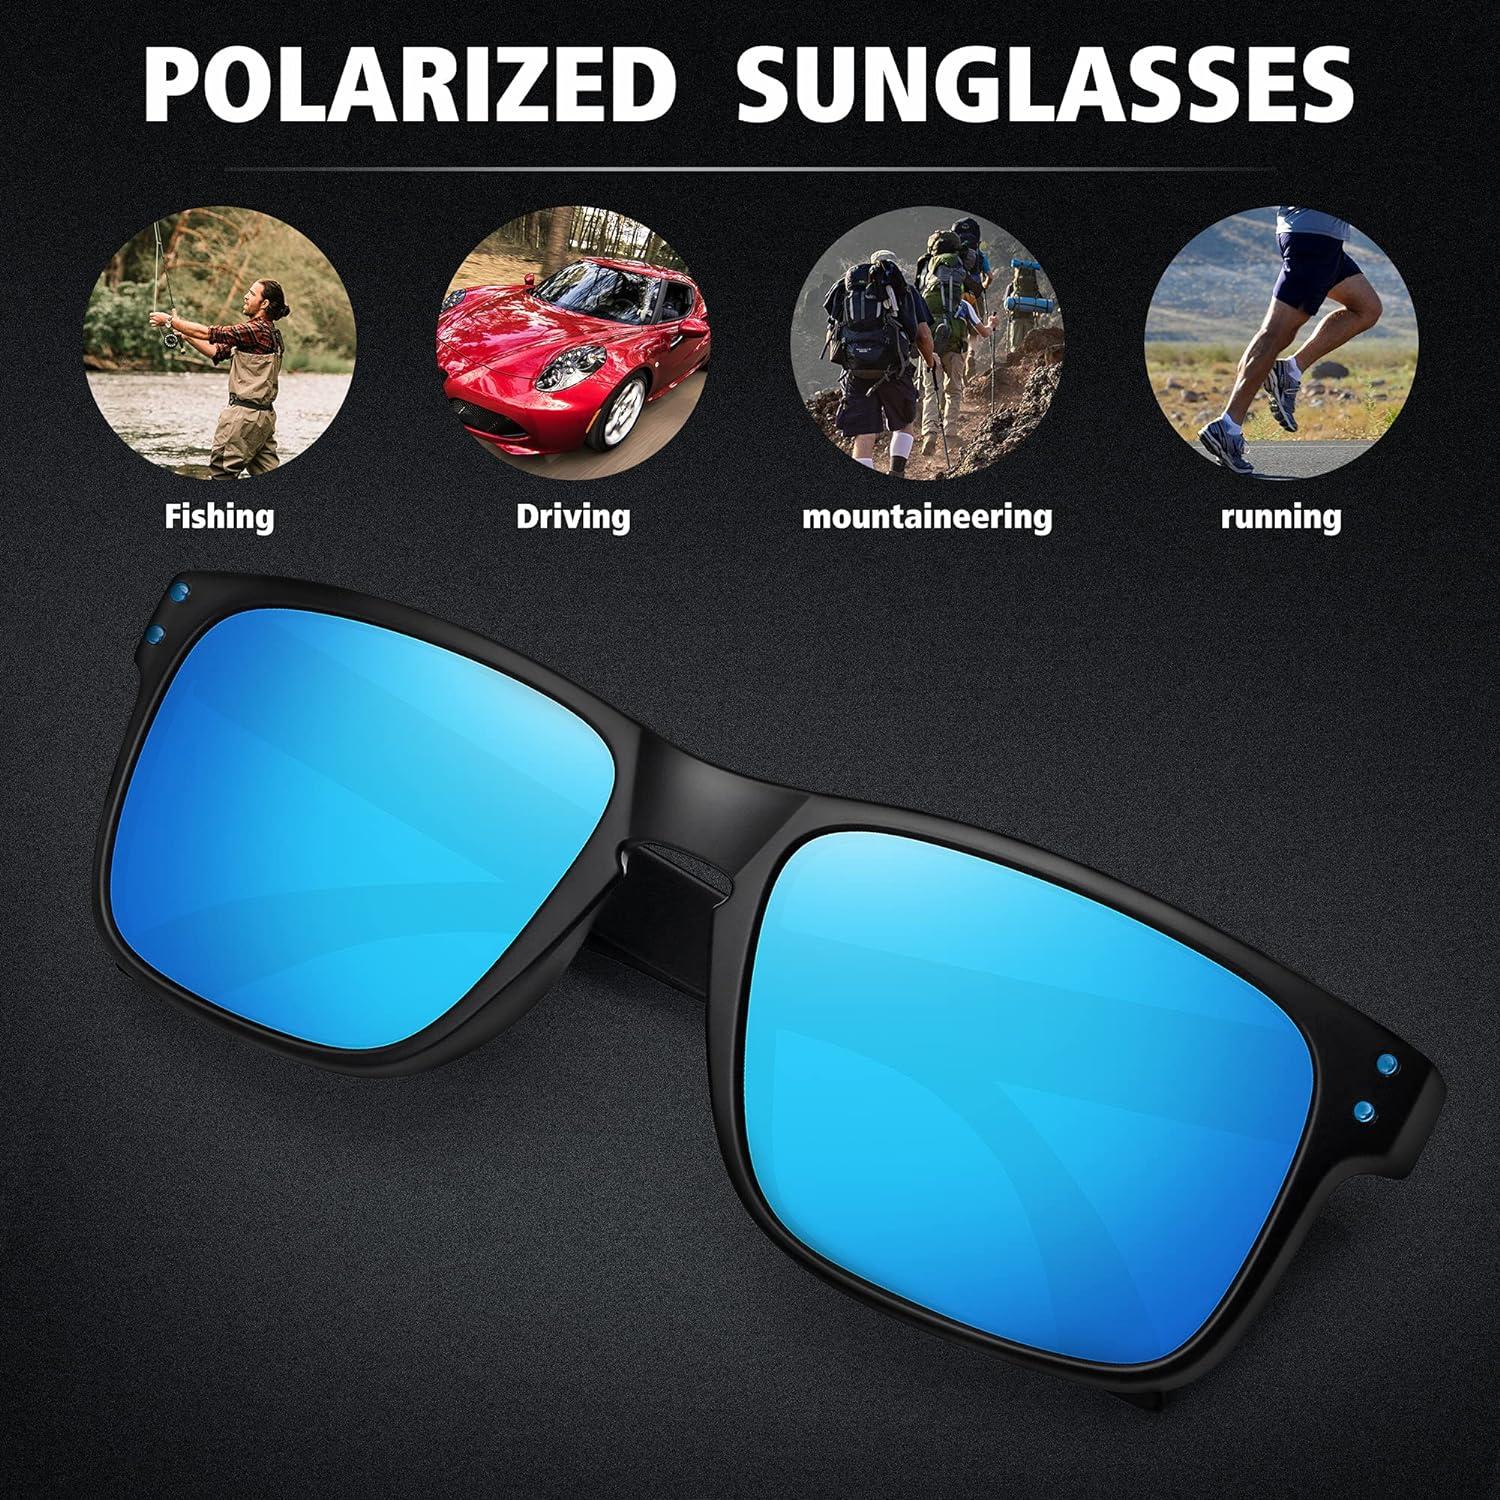 MEETSUN Polarized Sunglasses for Men Women Sports Driving Fishing Glasses  UV400 Protection (Tr)2 Pack -Black +Blue Mirror Lens